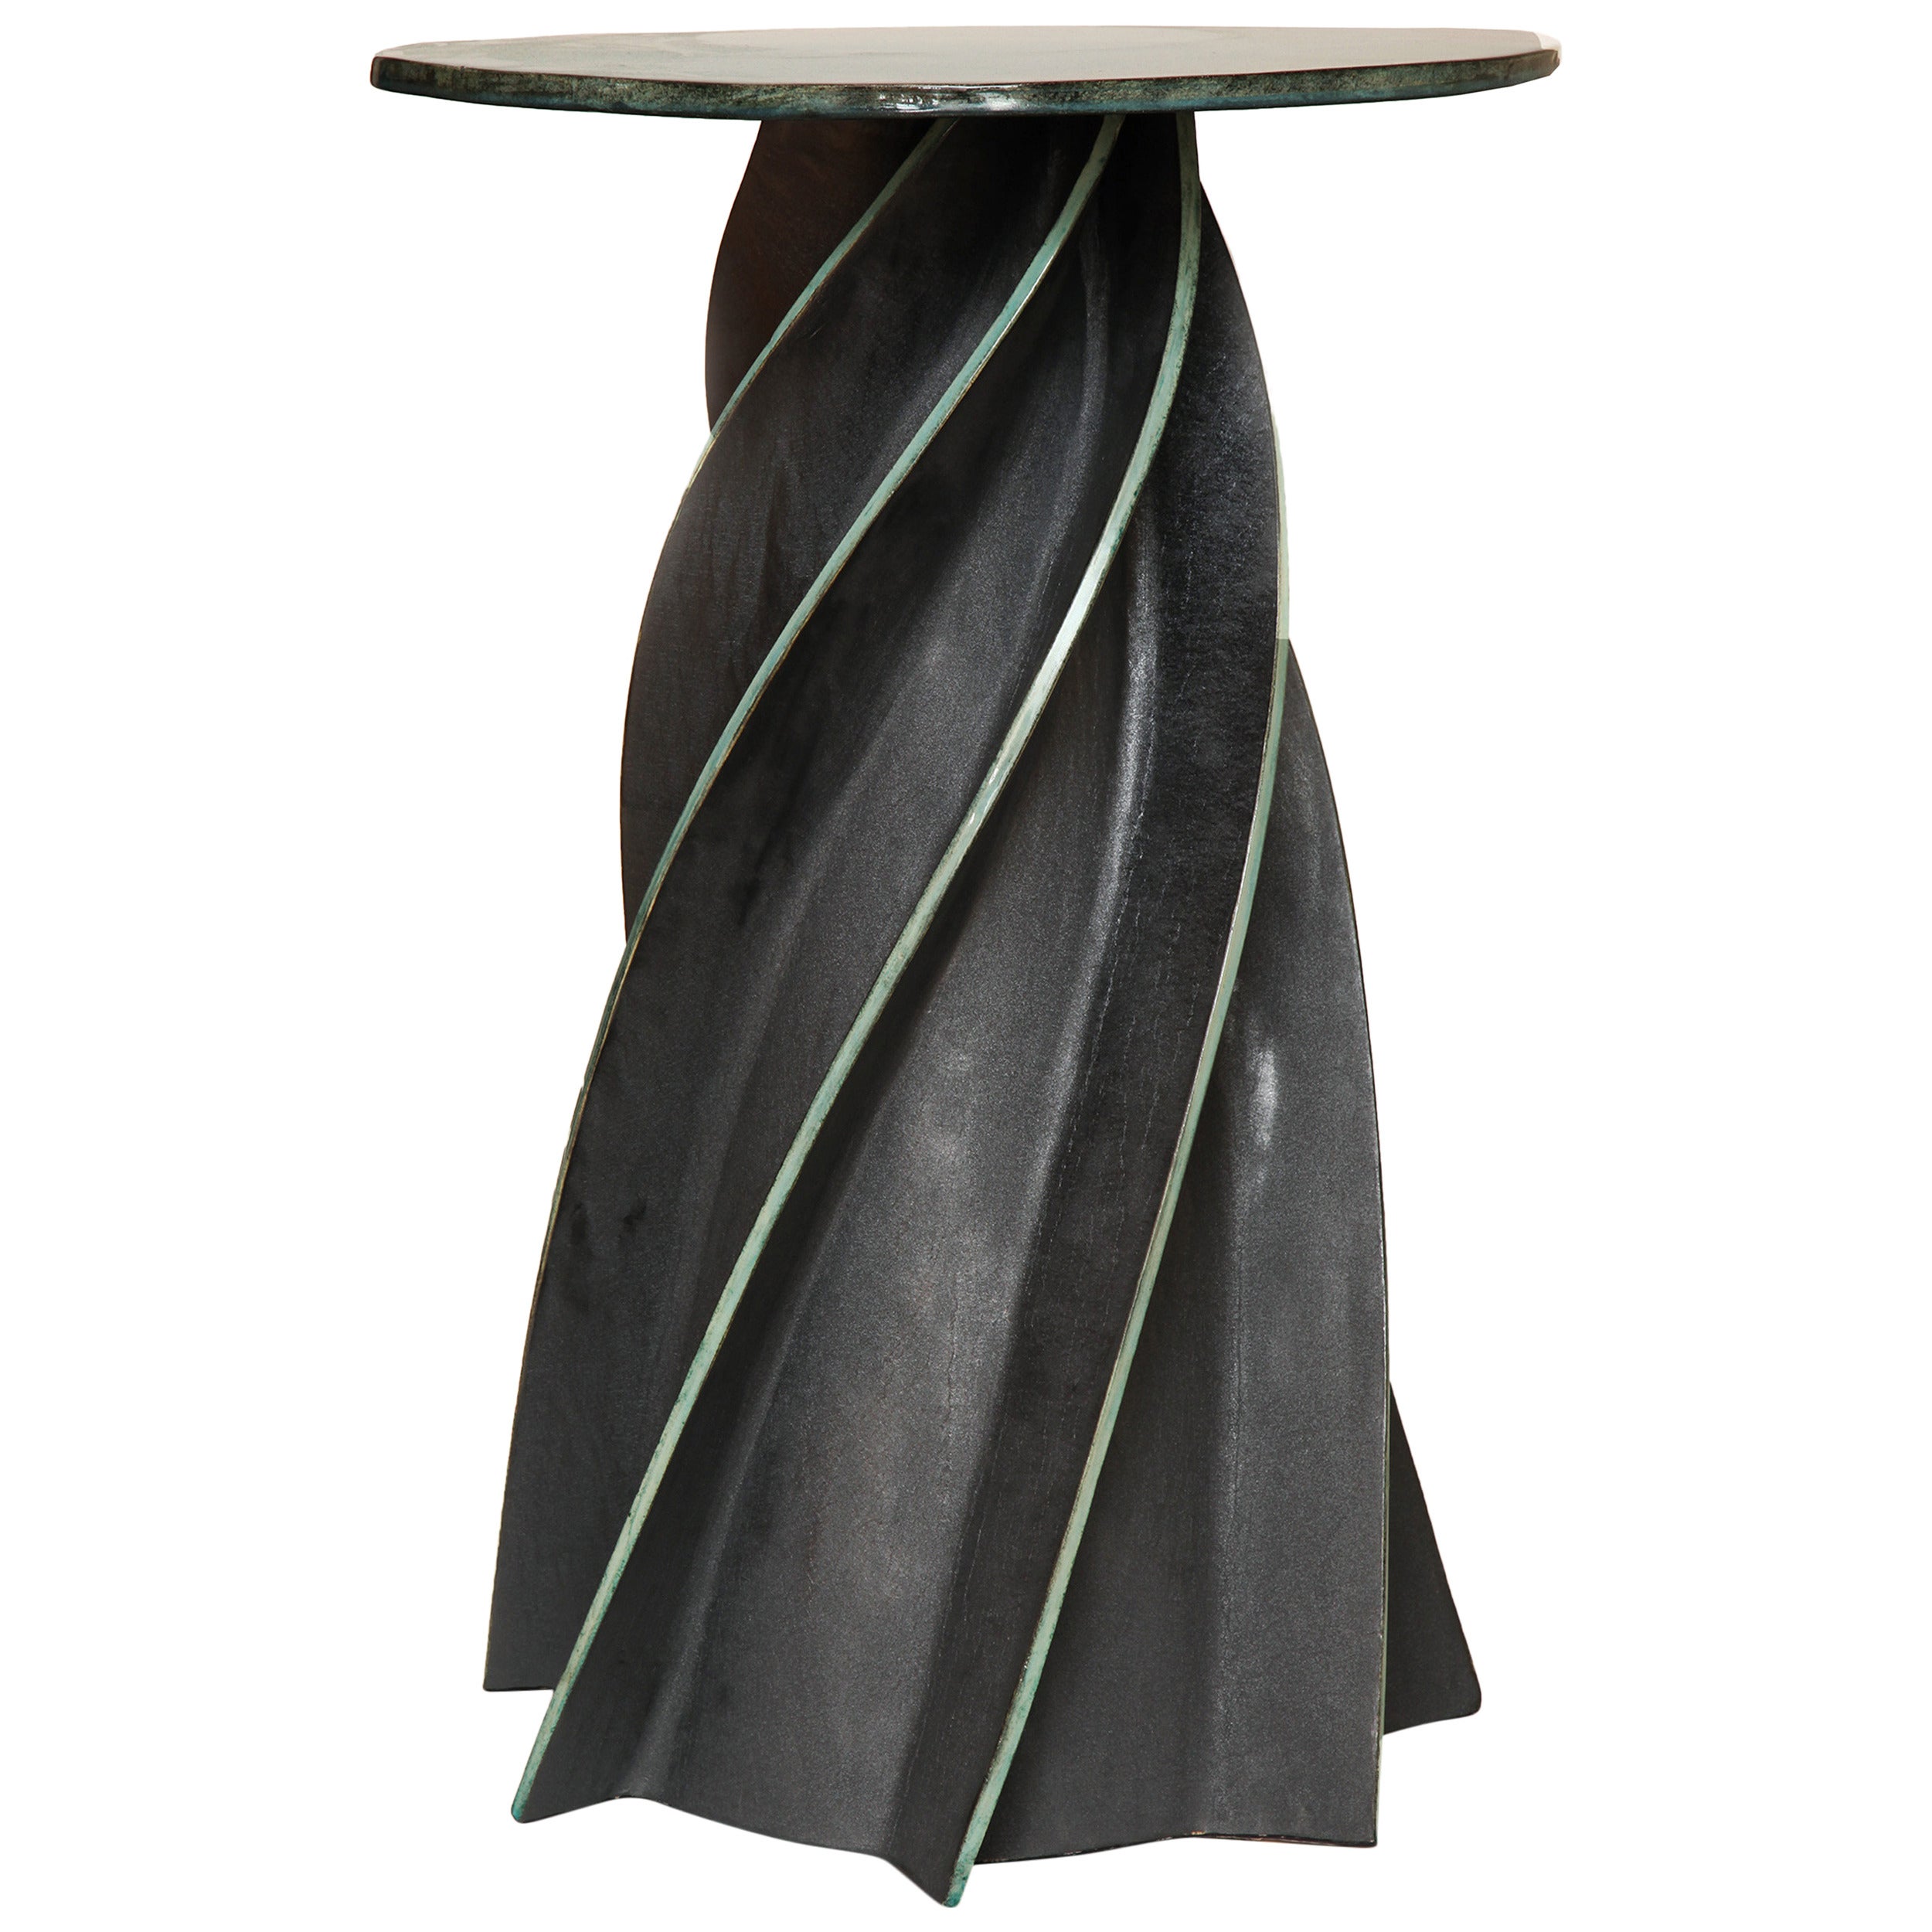 Twist Celadon Table by Francois Salem